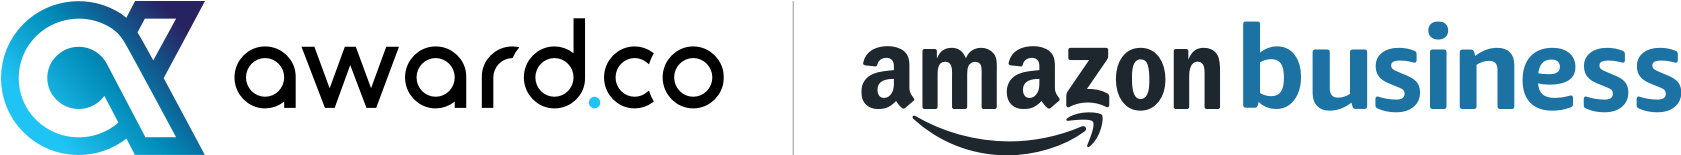 Awardco & Amazon Business Partnership - Amazon Clipart (1899x412), Png Download